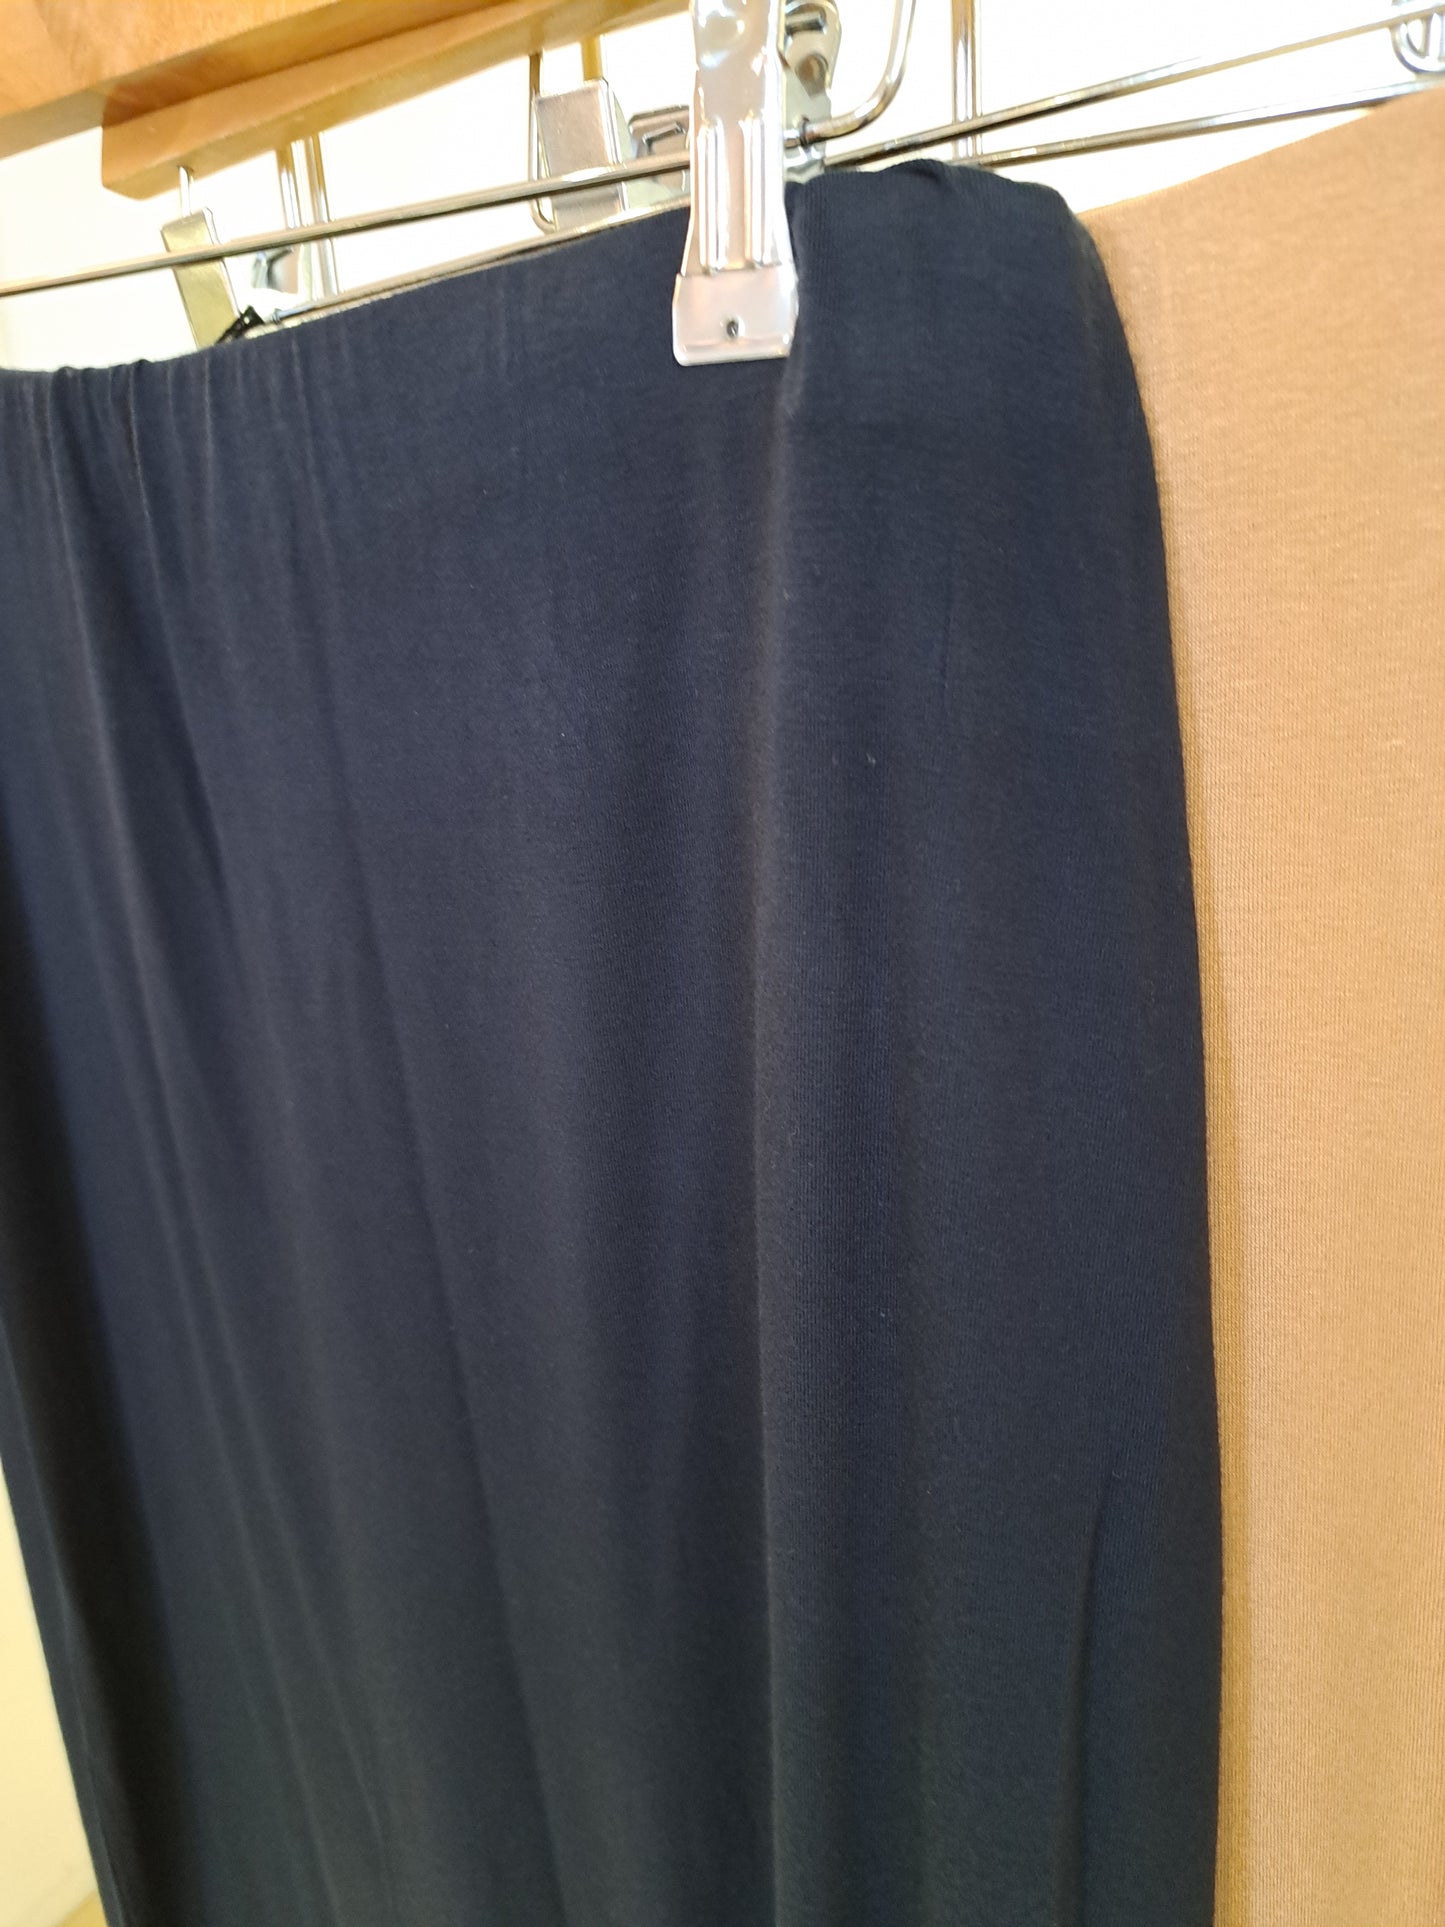 Jersey pull on Midi skirt - Maya Maya Ltd